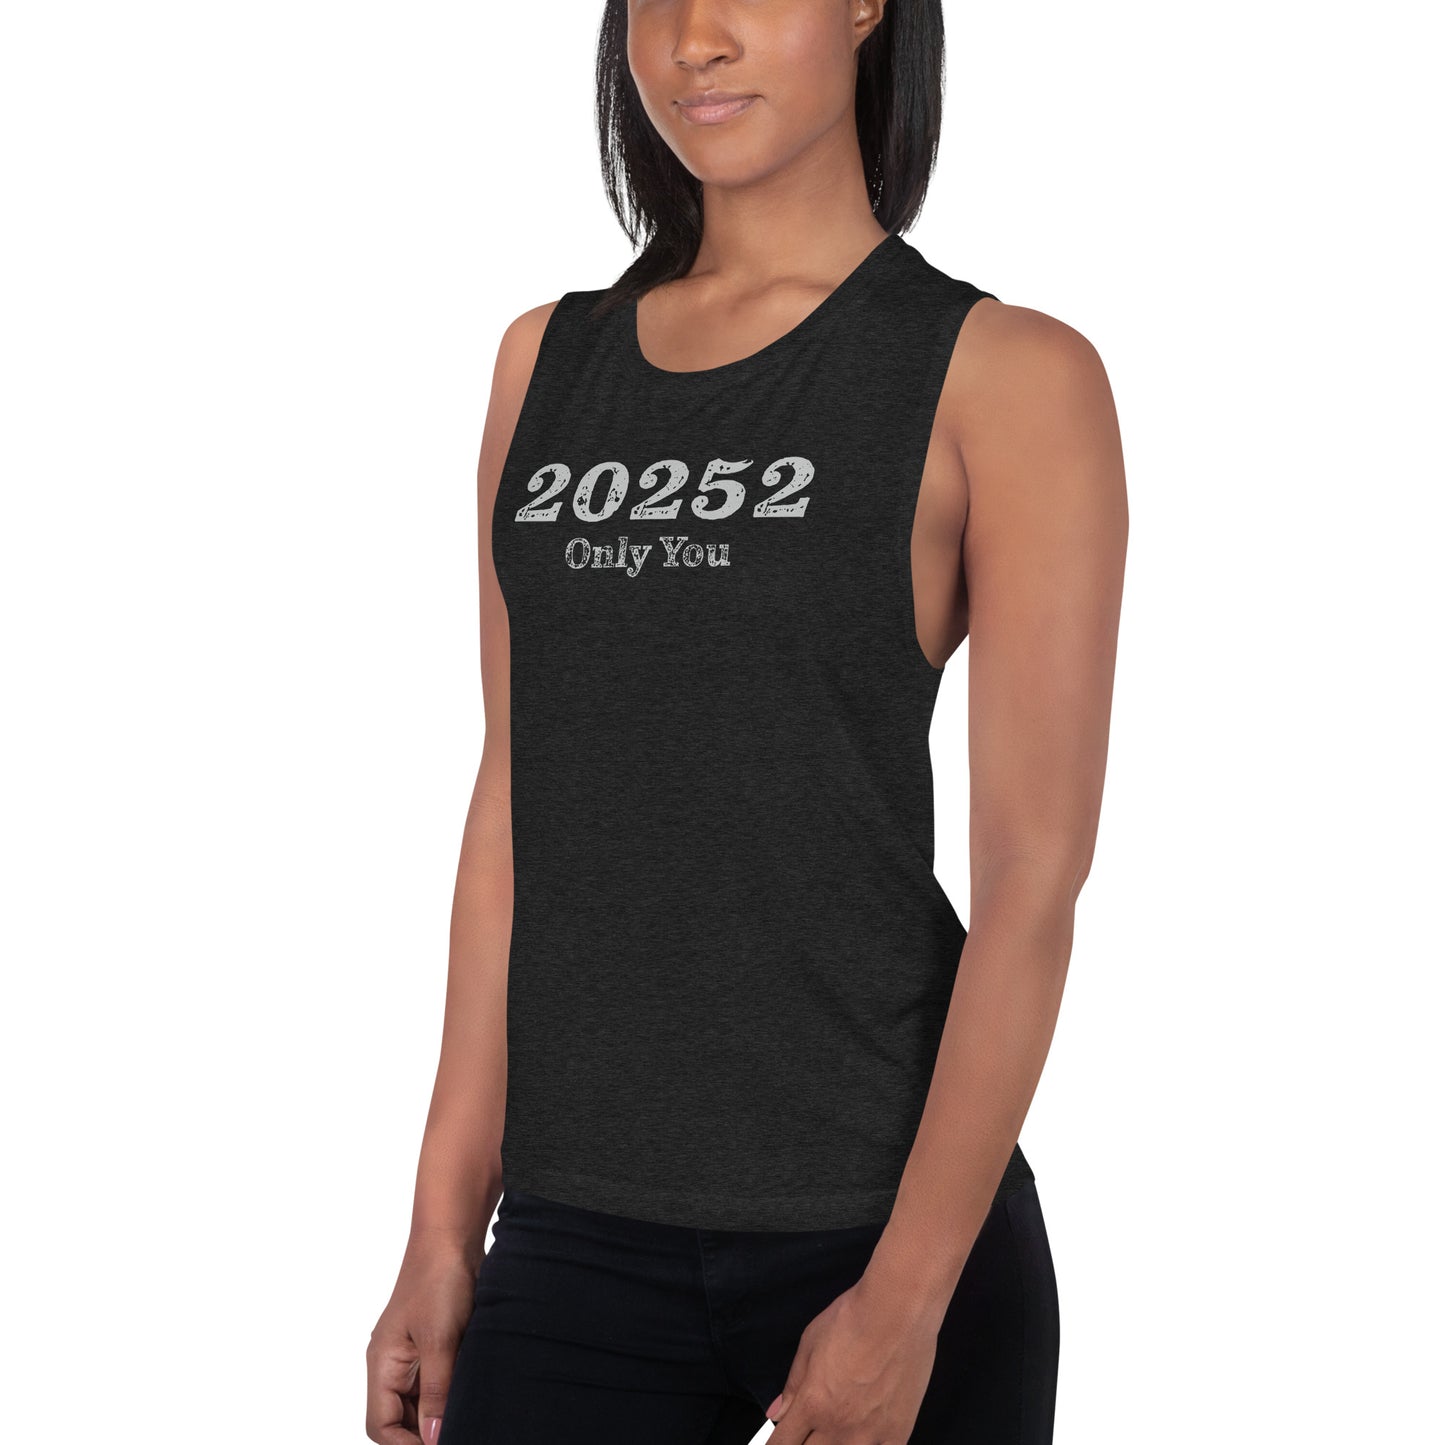 Women's Muscle Tank - 20252 Original Only You Design